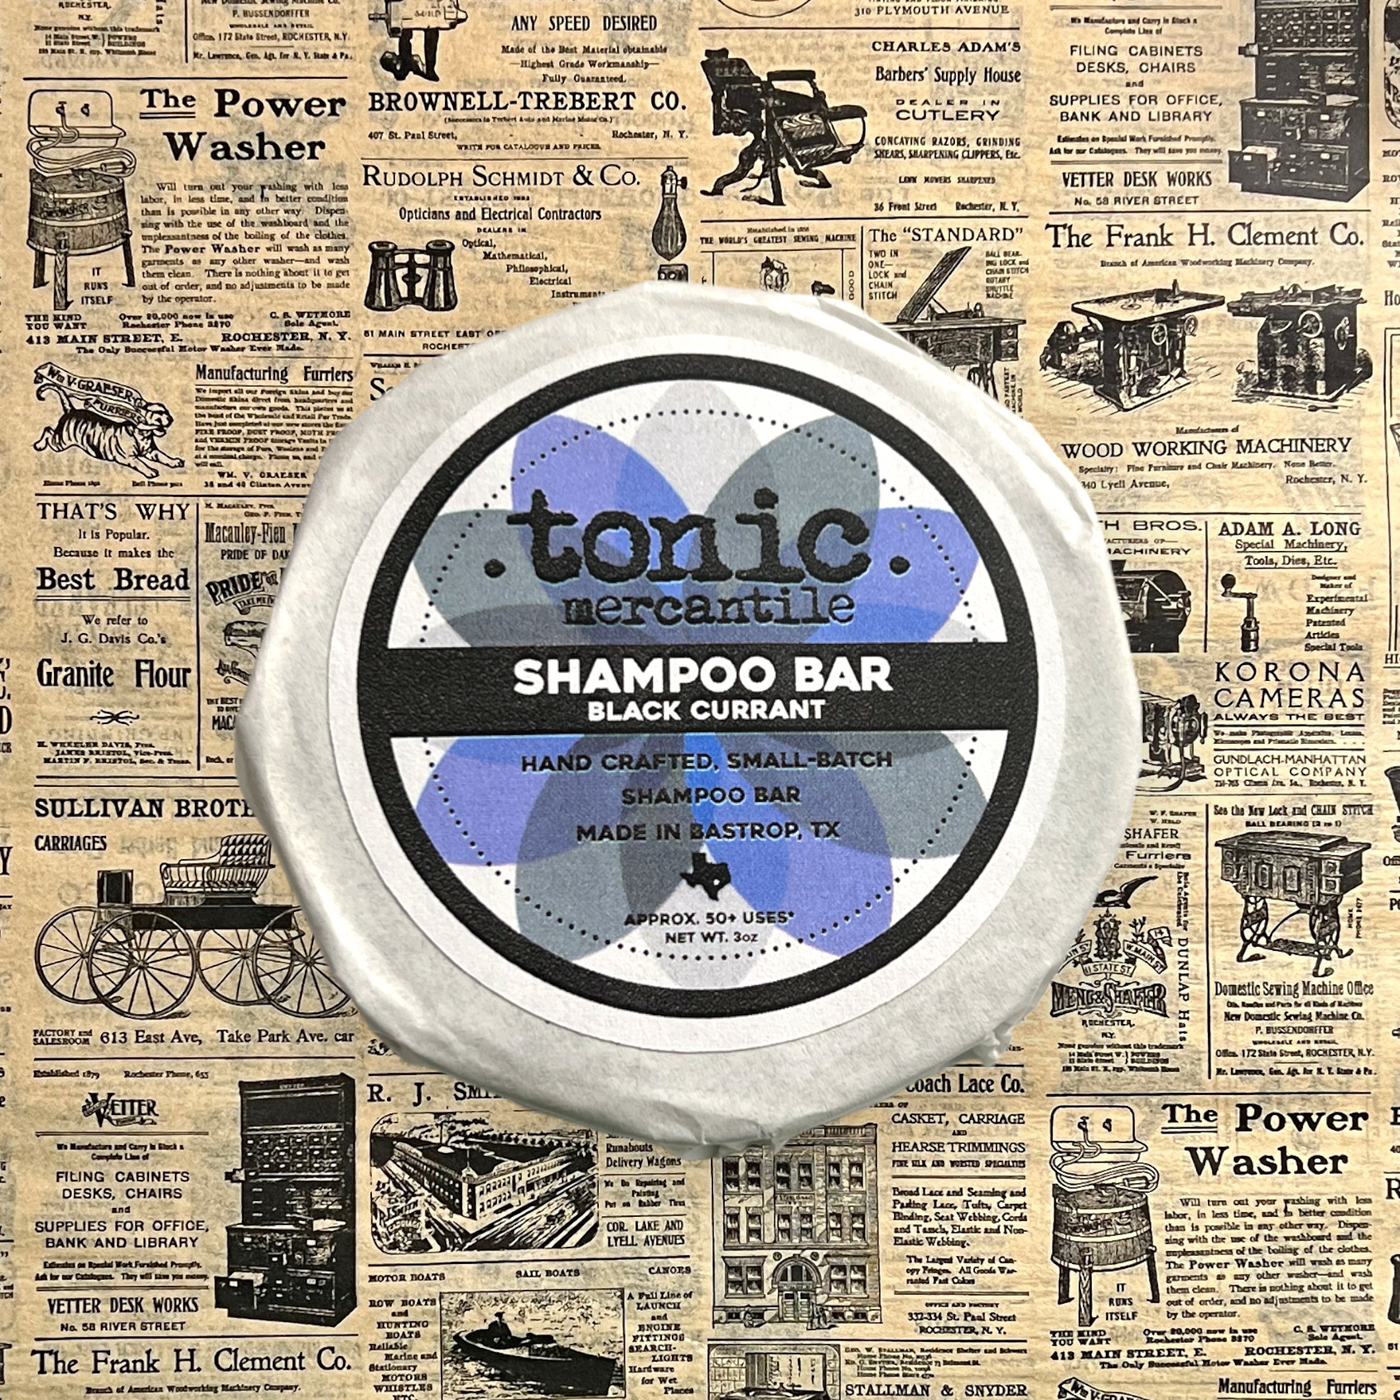 Black Currant Shampoo Bar